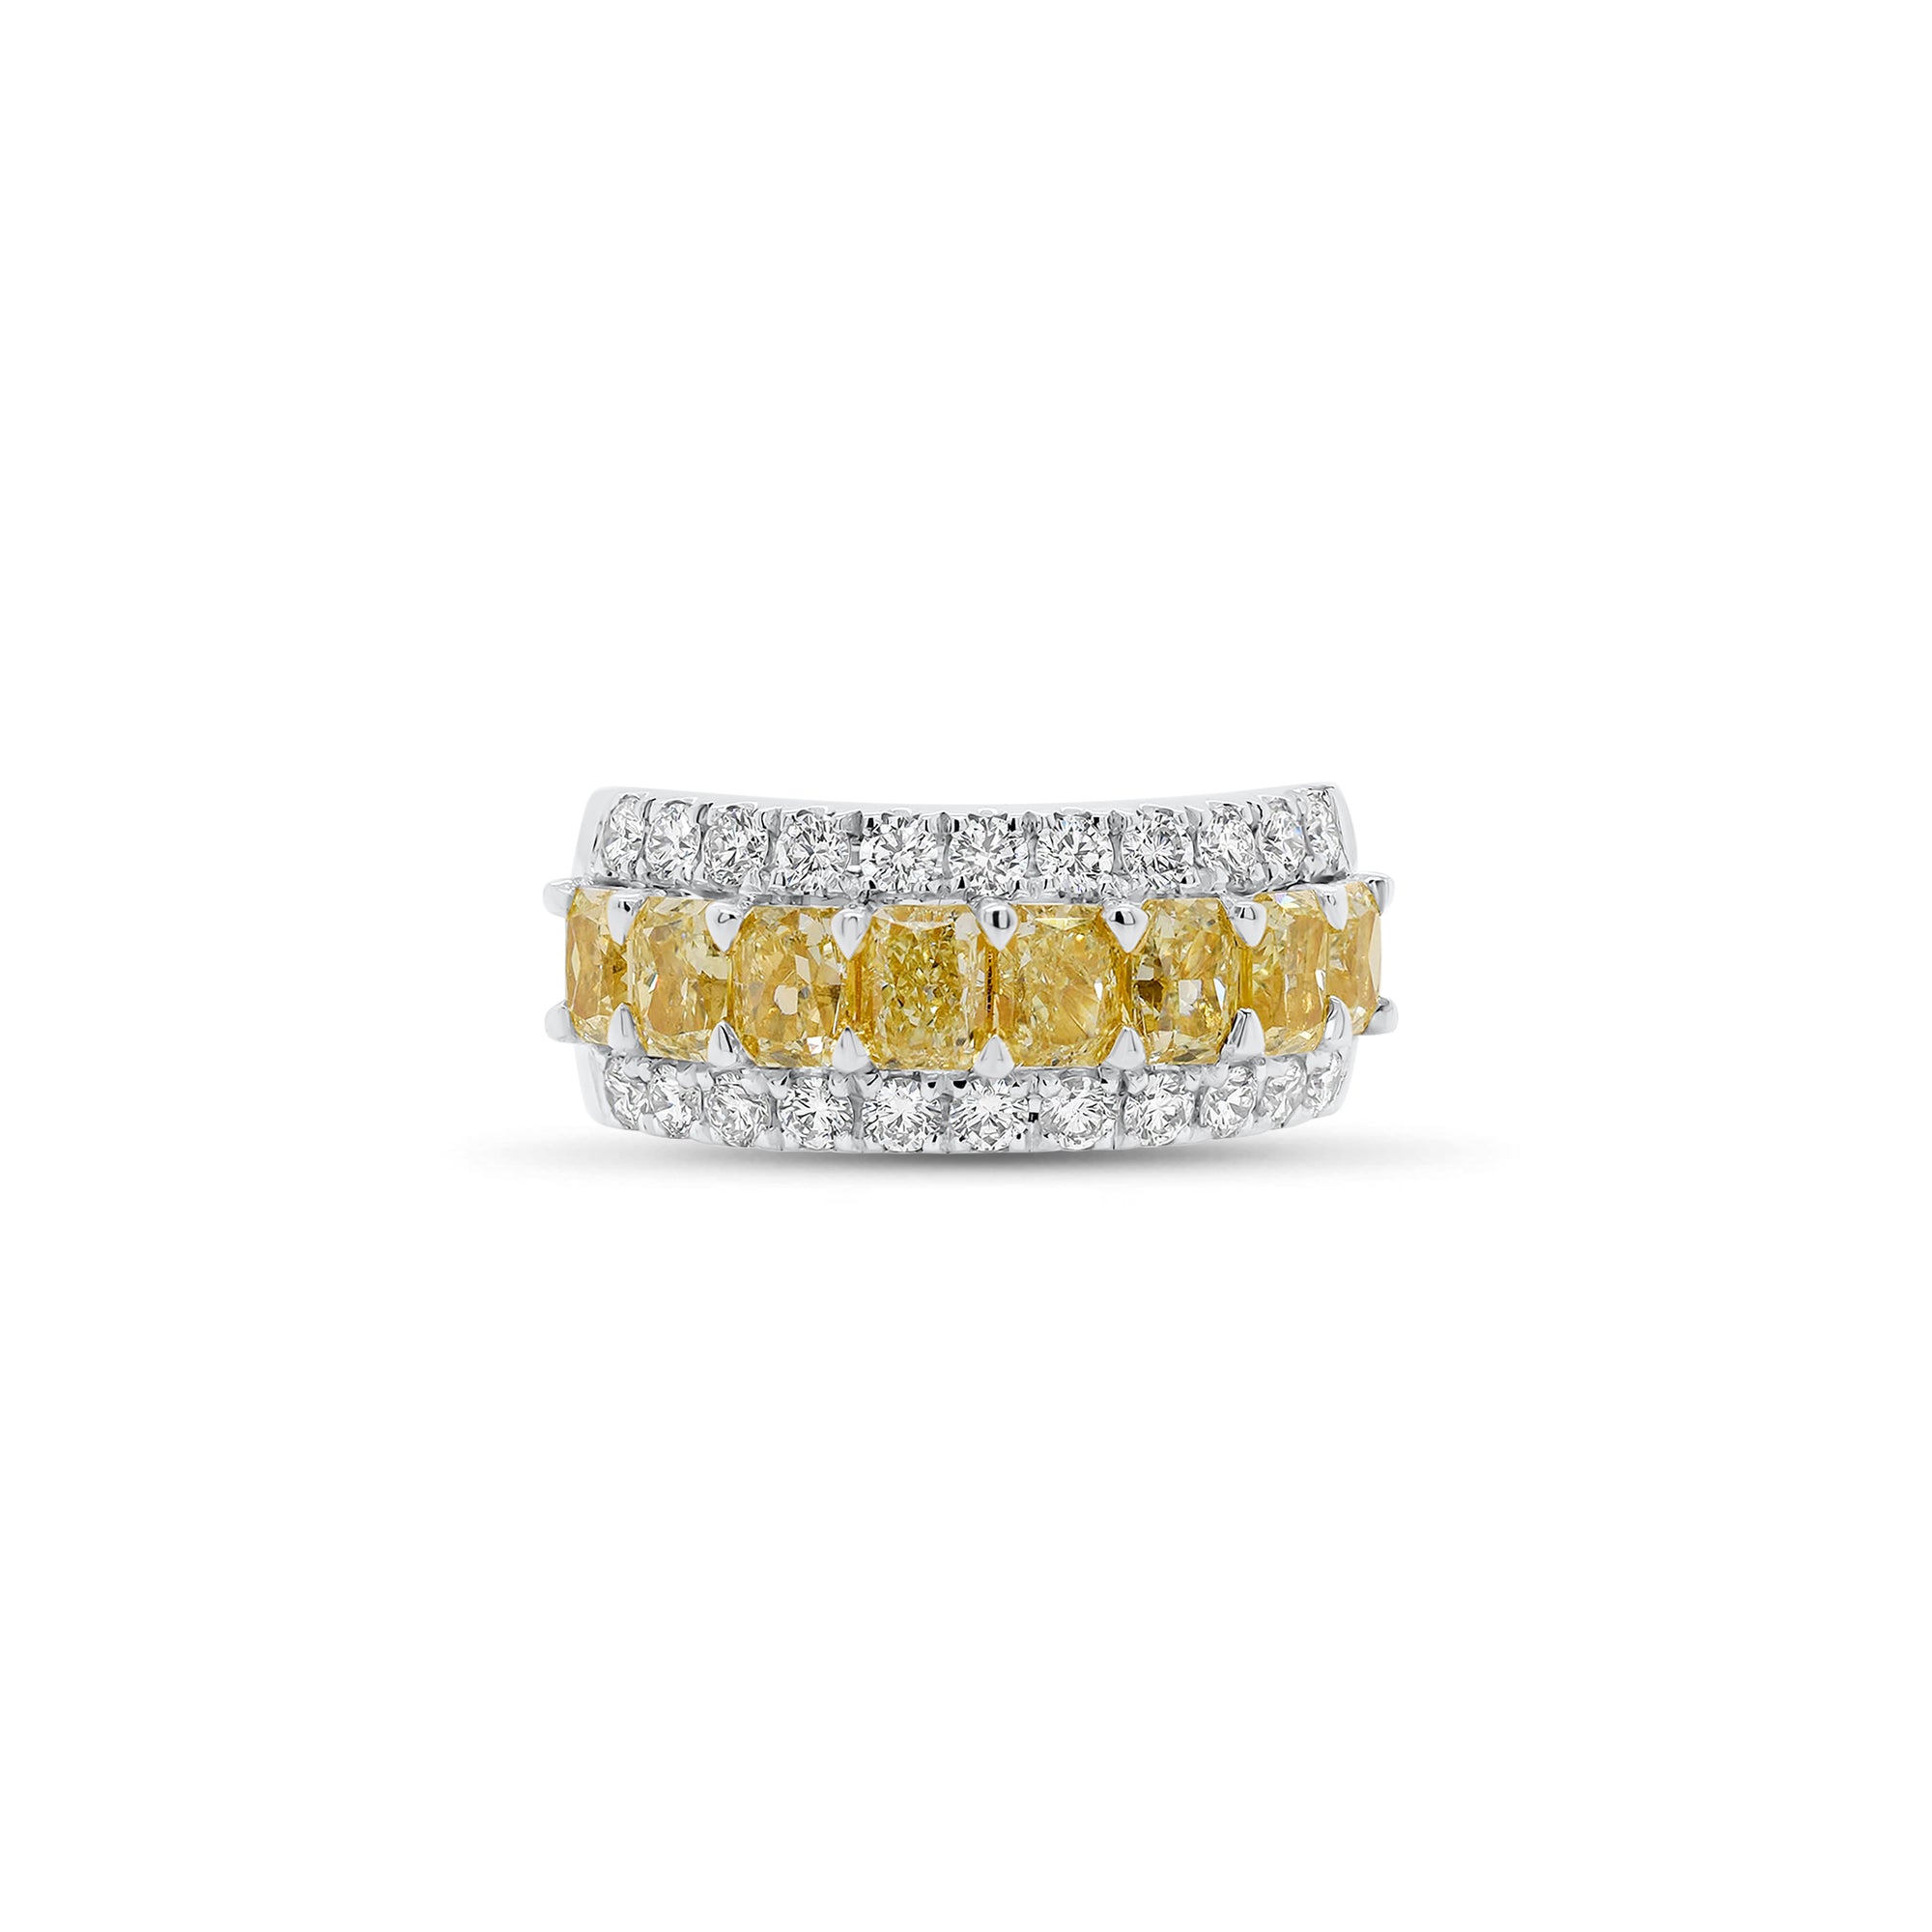 Fancy Yellow Diamond Wedding Band - 18K gold weighing 7.25 grams  - 22 round diamonds weighing 0.73 carats  - 8 Fancy yellow radiant-cut diamonds weighing 2.75 carats